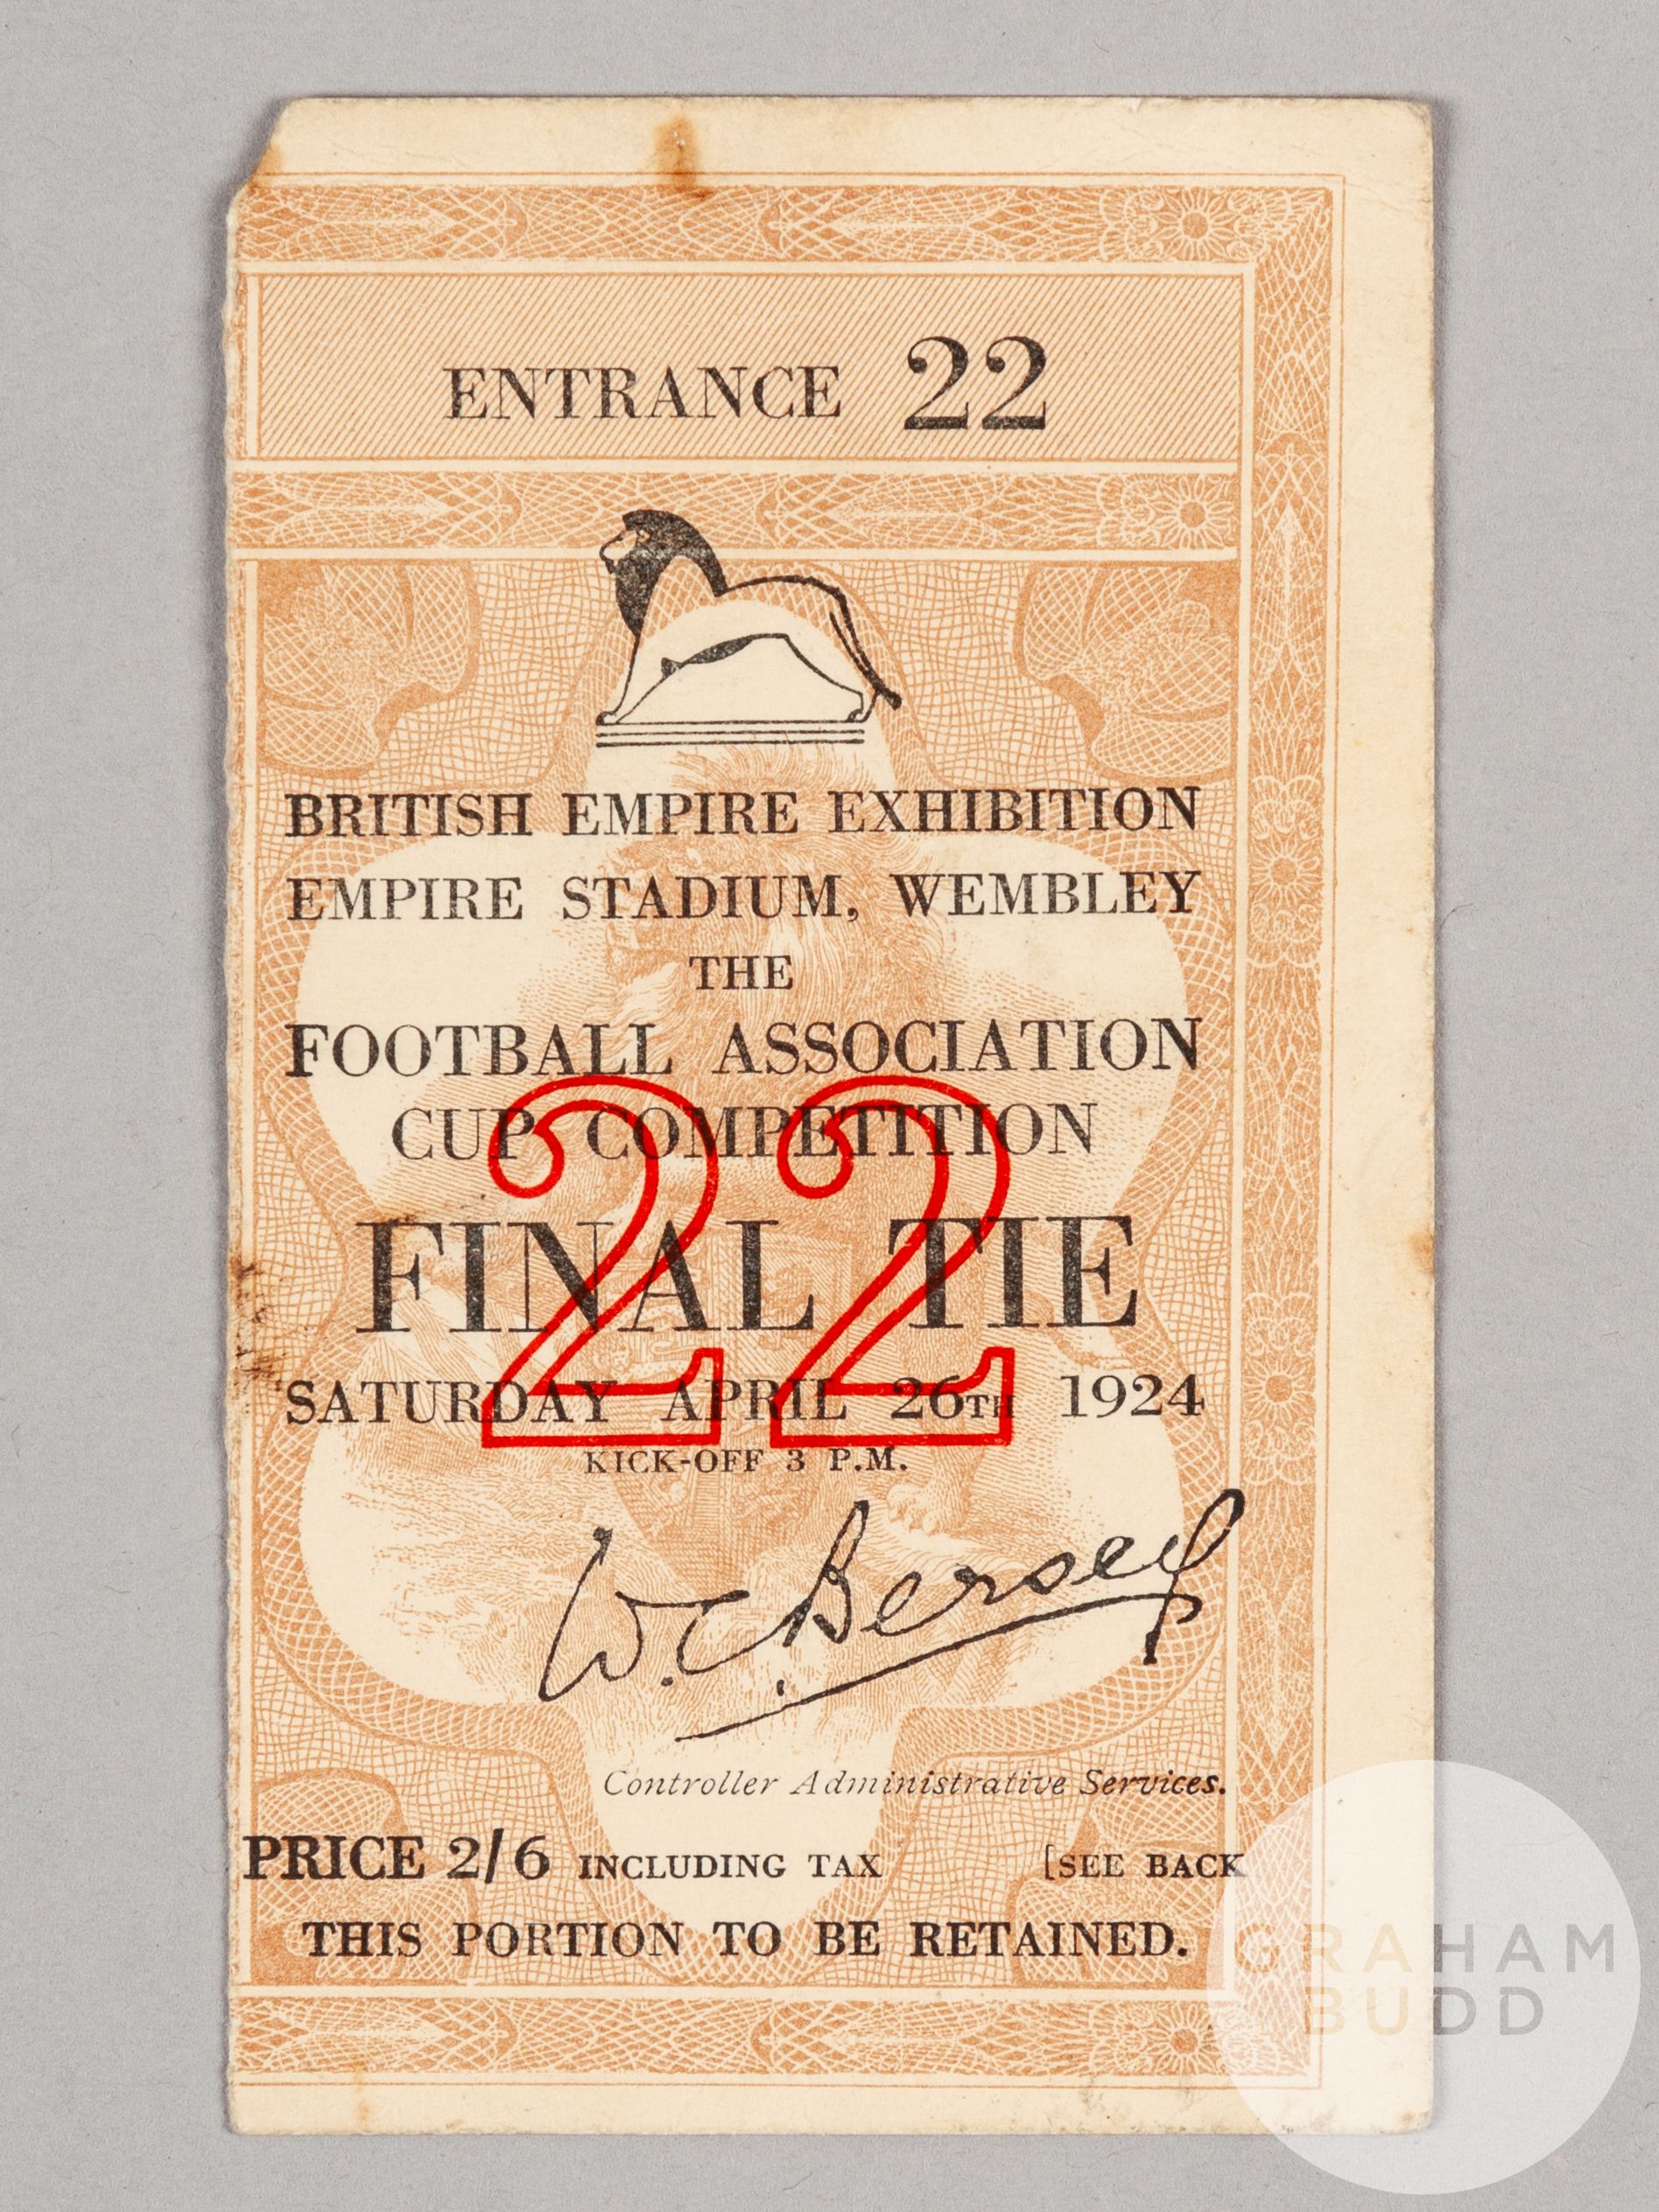 1924 FA Cup Final ticket stub, held at British Empire Exhibition Empire Stadium, Wembley, 26th April